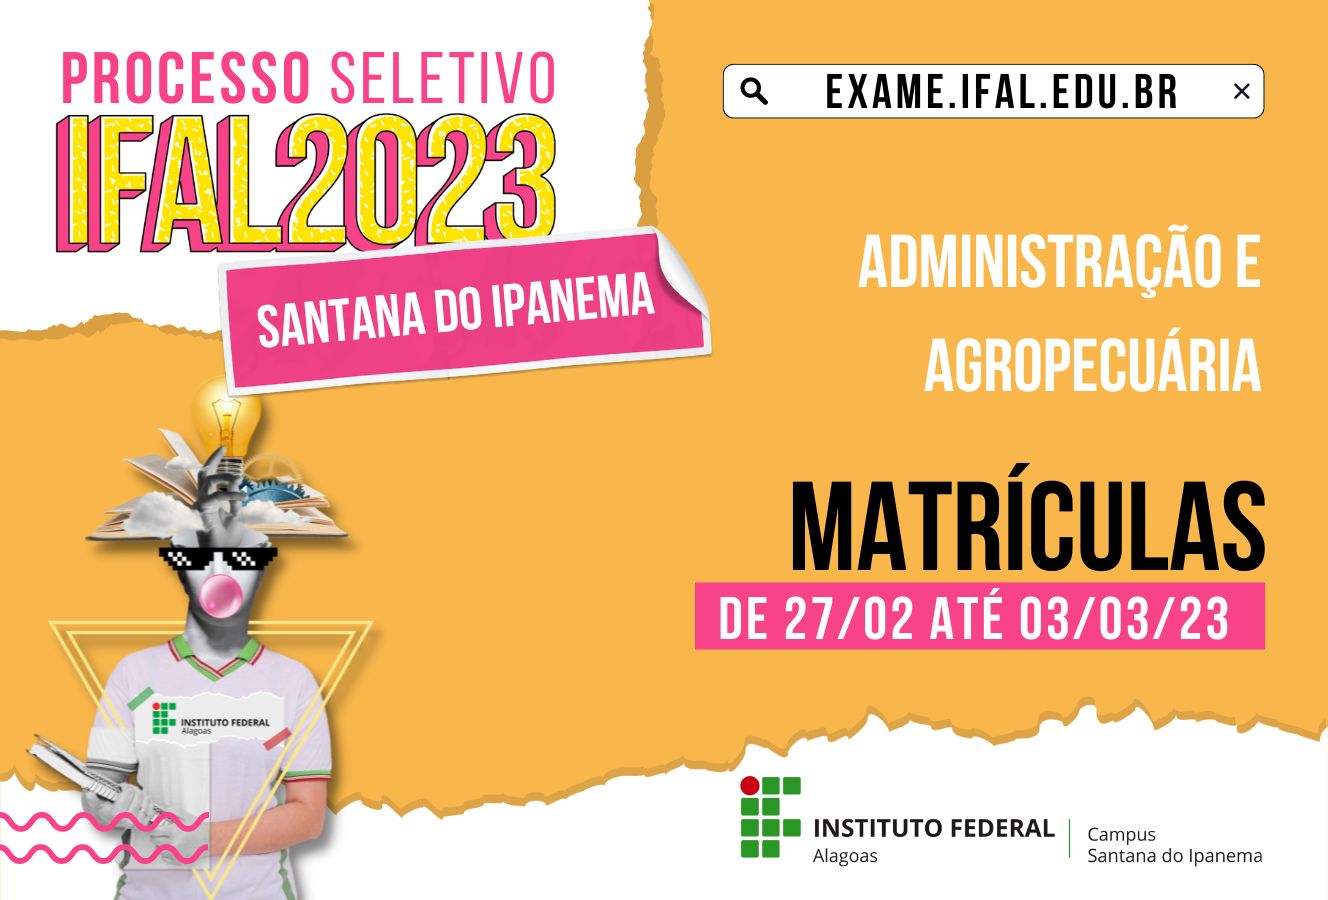 Matrícula dos cursos integrados no Campus Santana do Ipanema